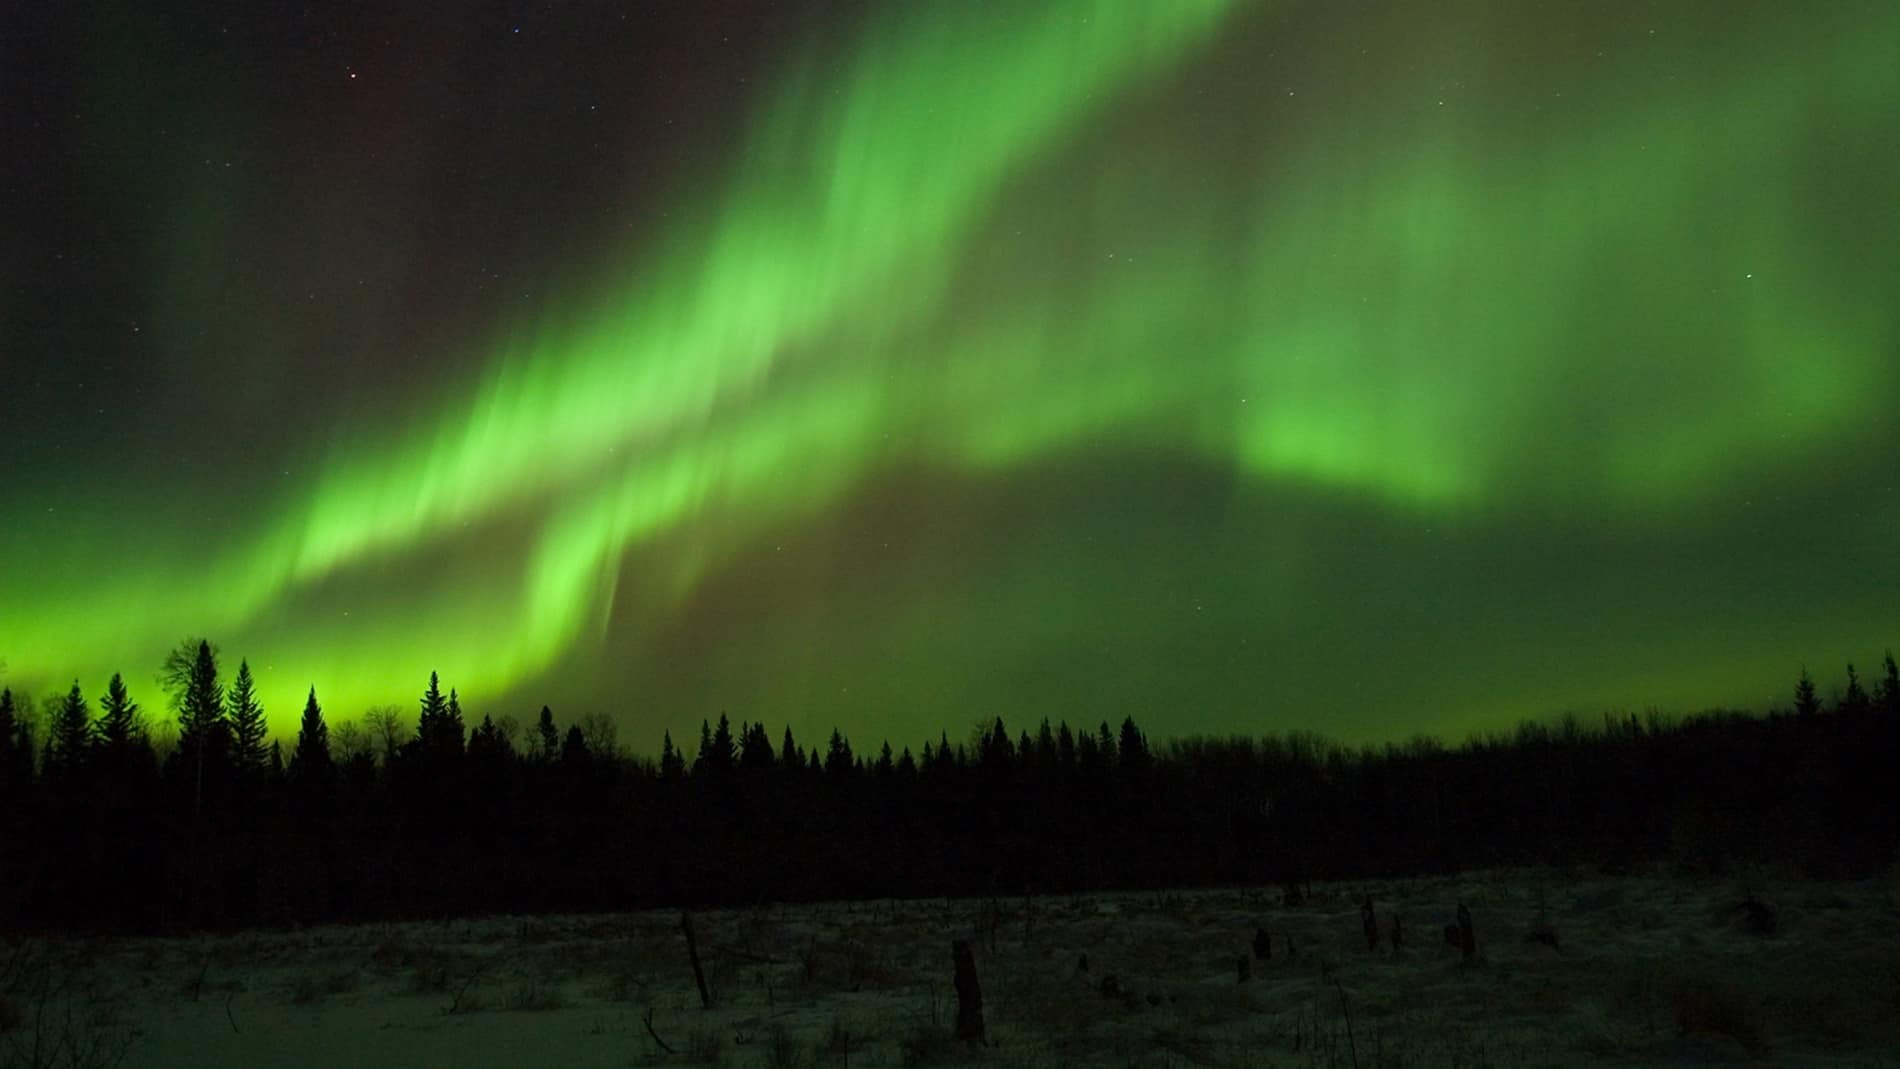 Photograph of Saskatchewan's living sky